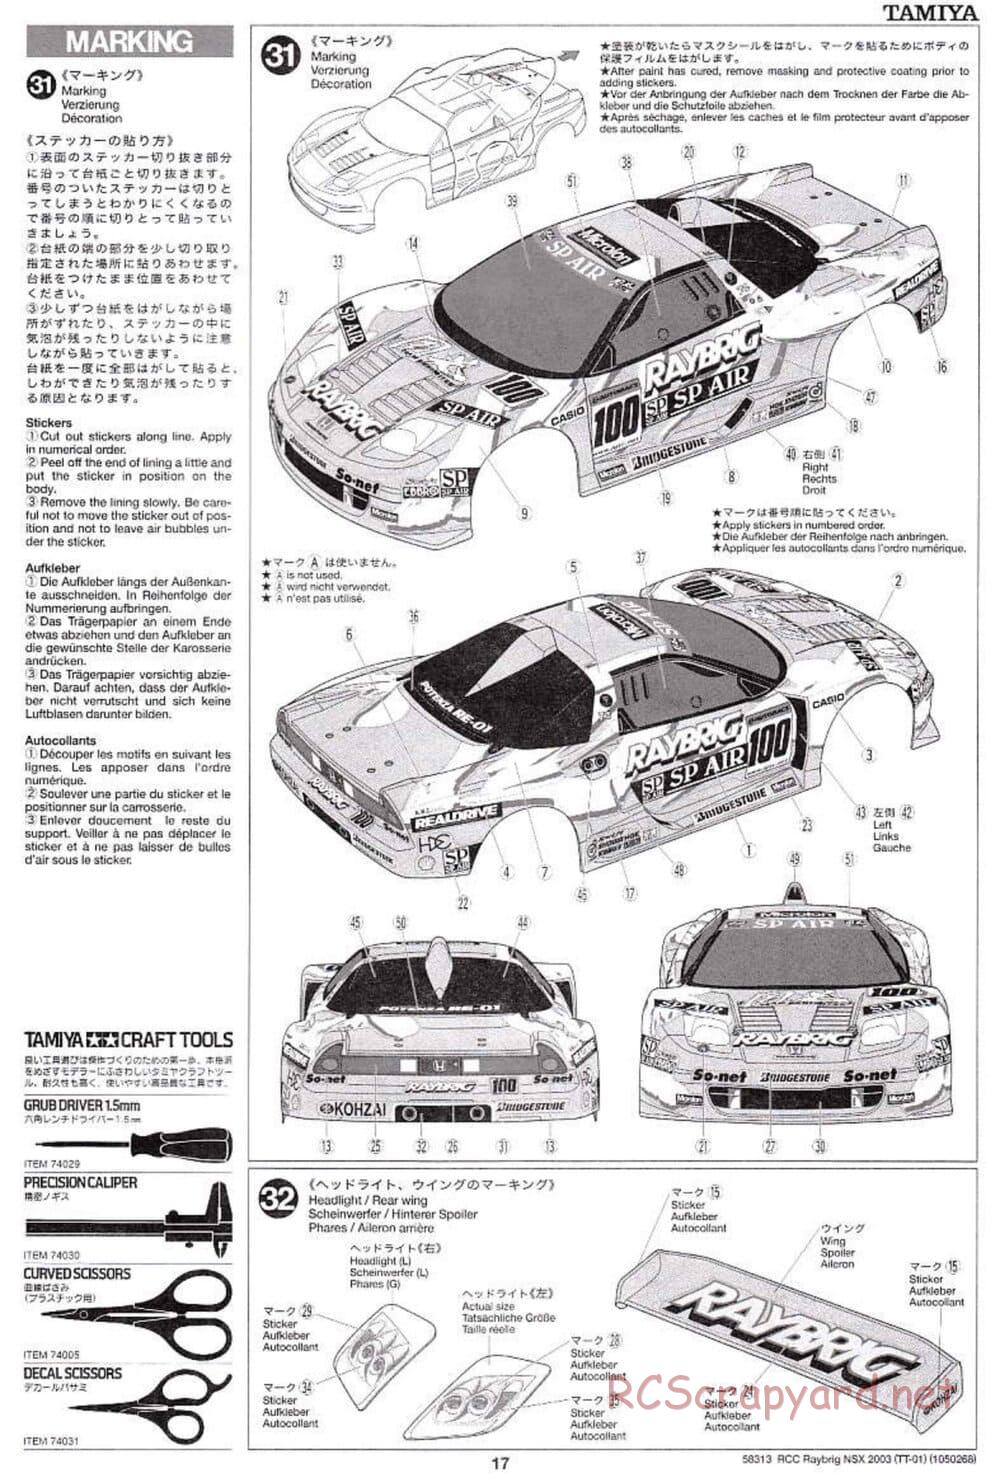 Tamiya - Raybrig NSX 2003 - TT-01 Chassis - Manual - Page 17